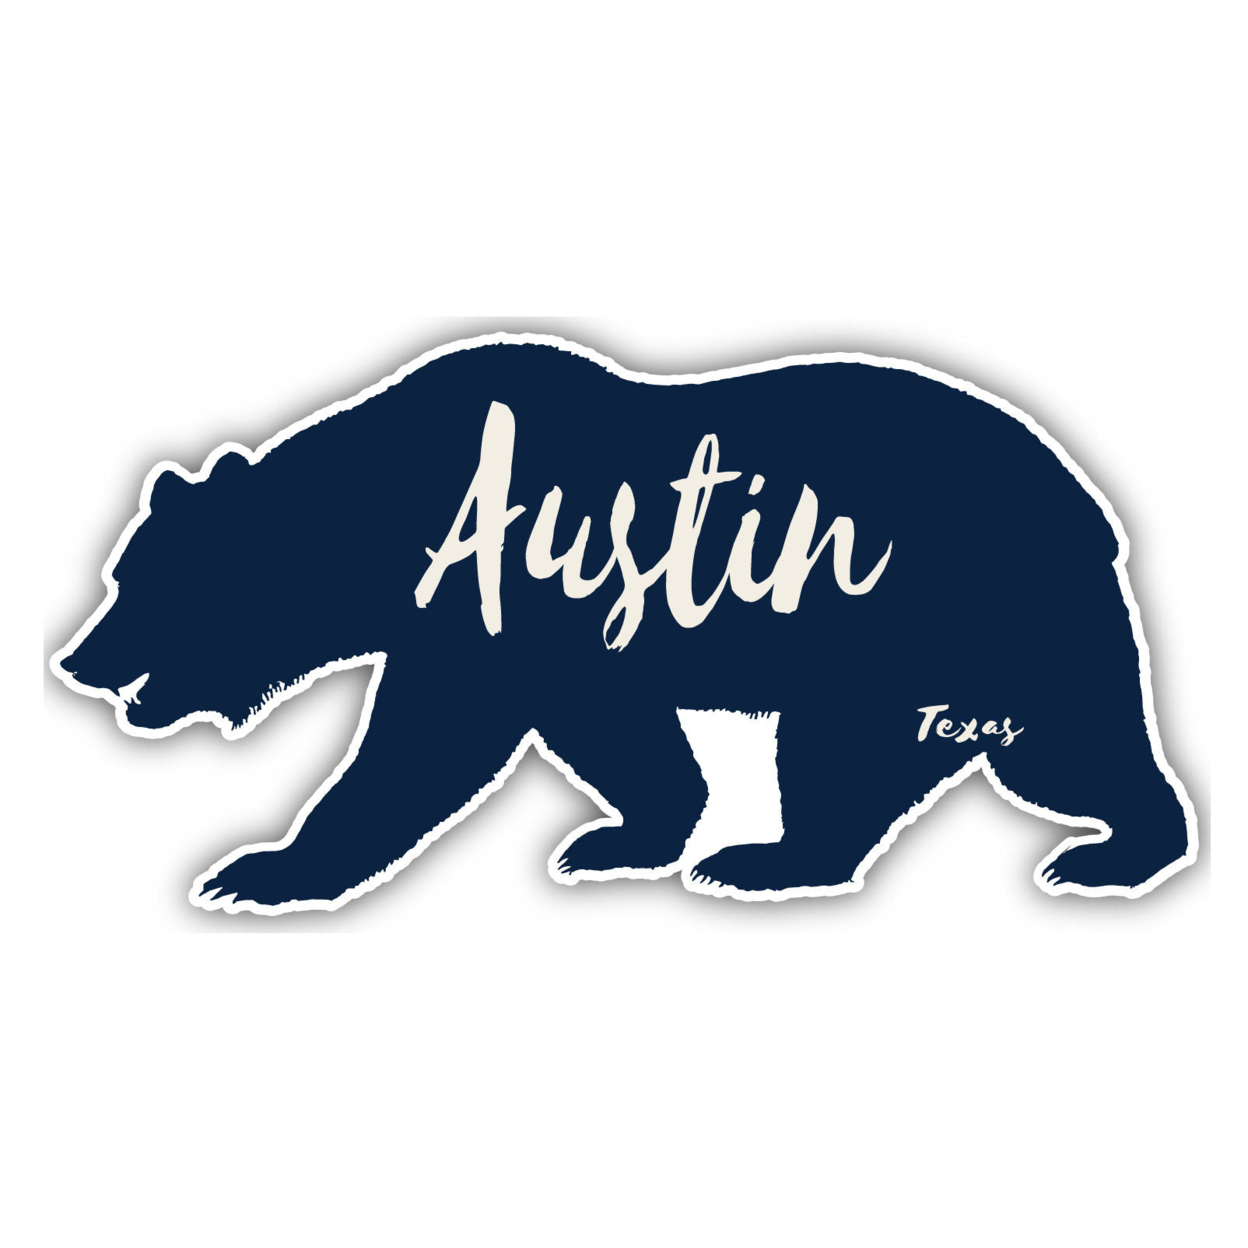 Austin Texas Souvenir Decorative Stickers (Choose Theme And Size) - 4-Pack, 10-Inch, Bear